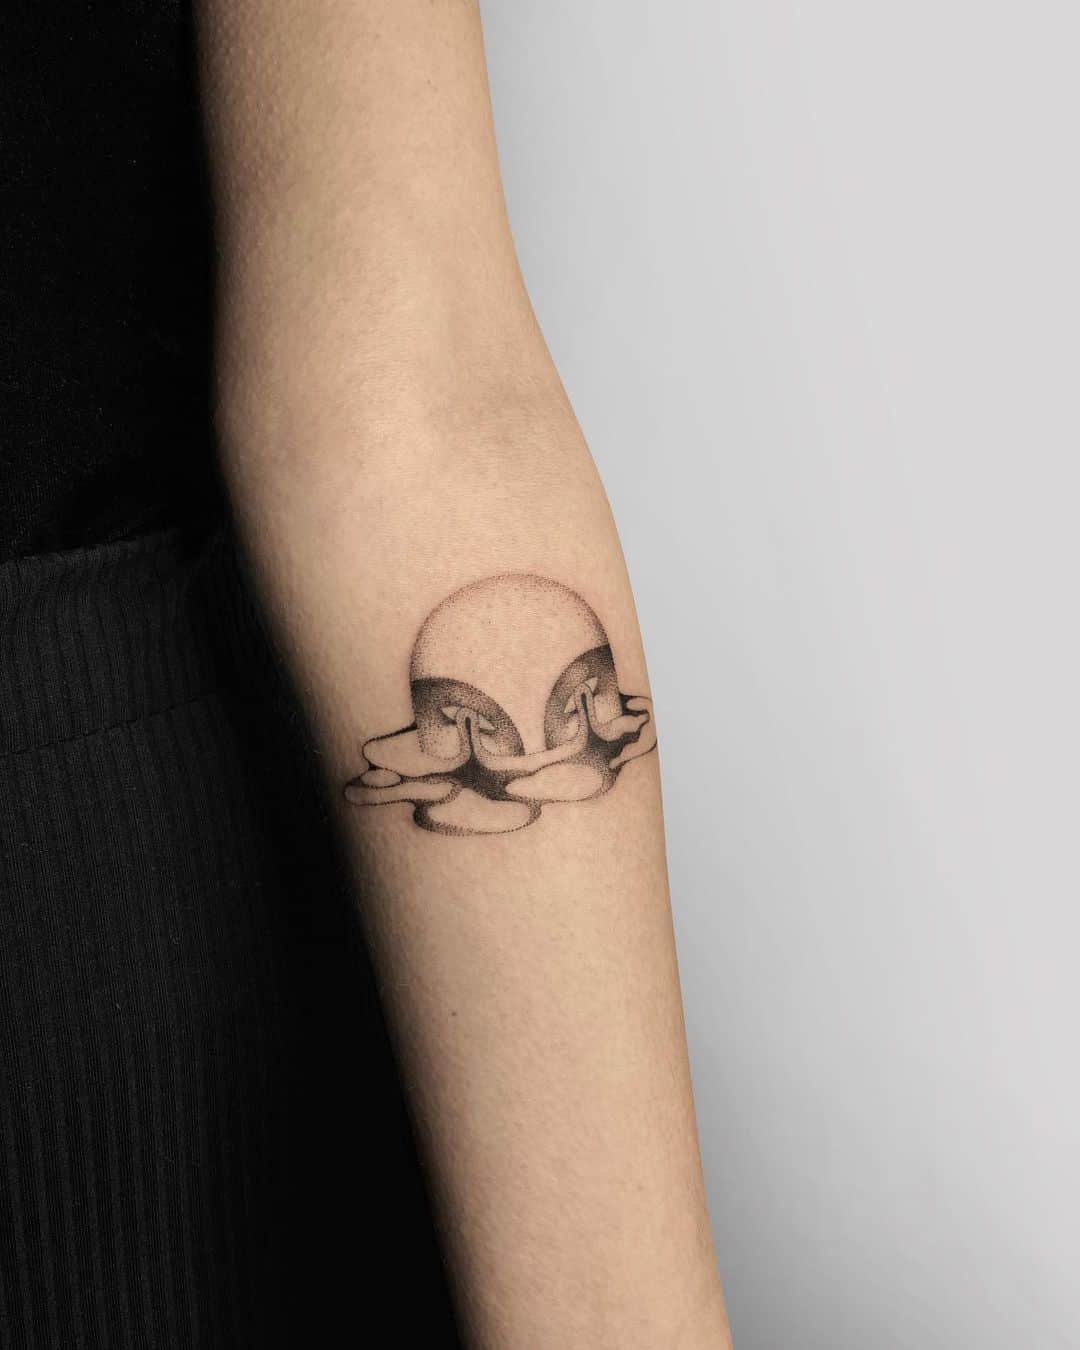 Simple dot tattoo by encr.ecarlate